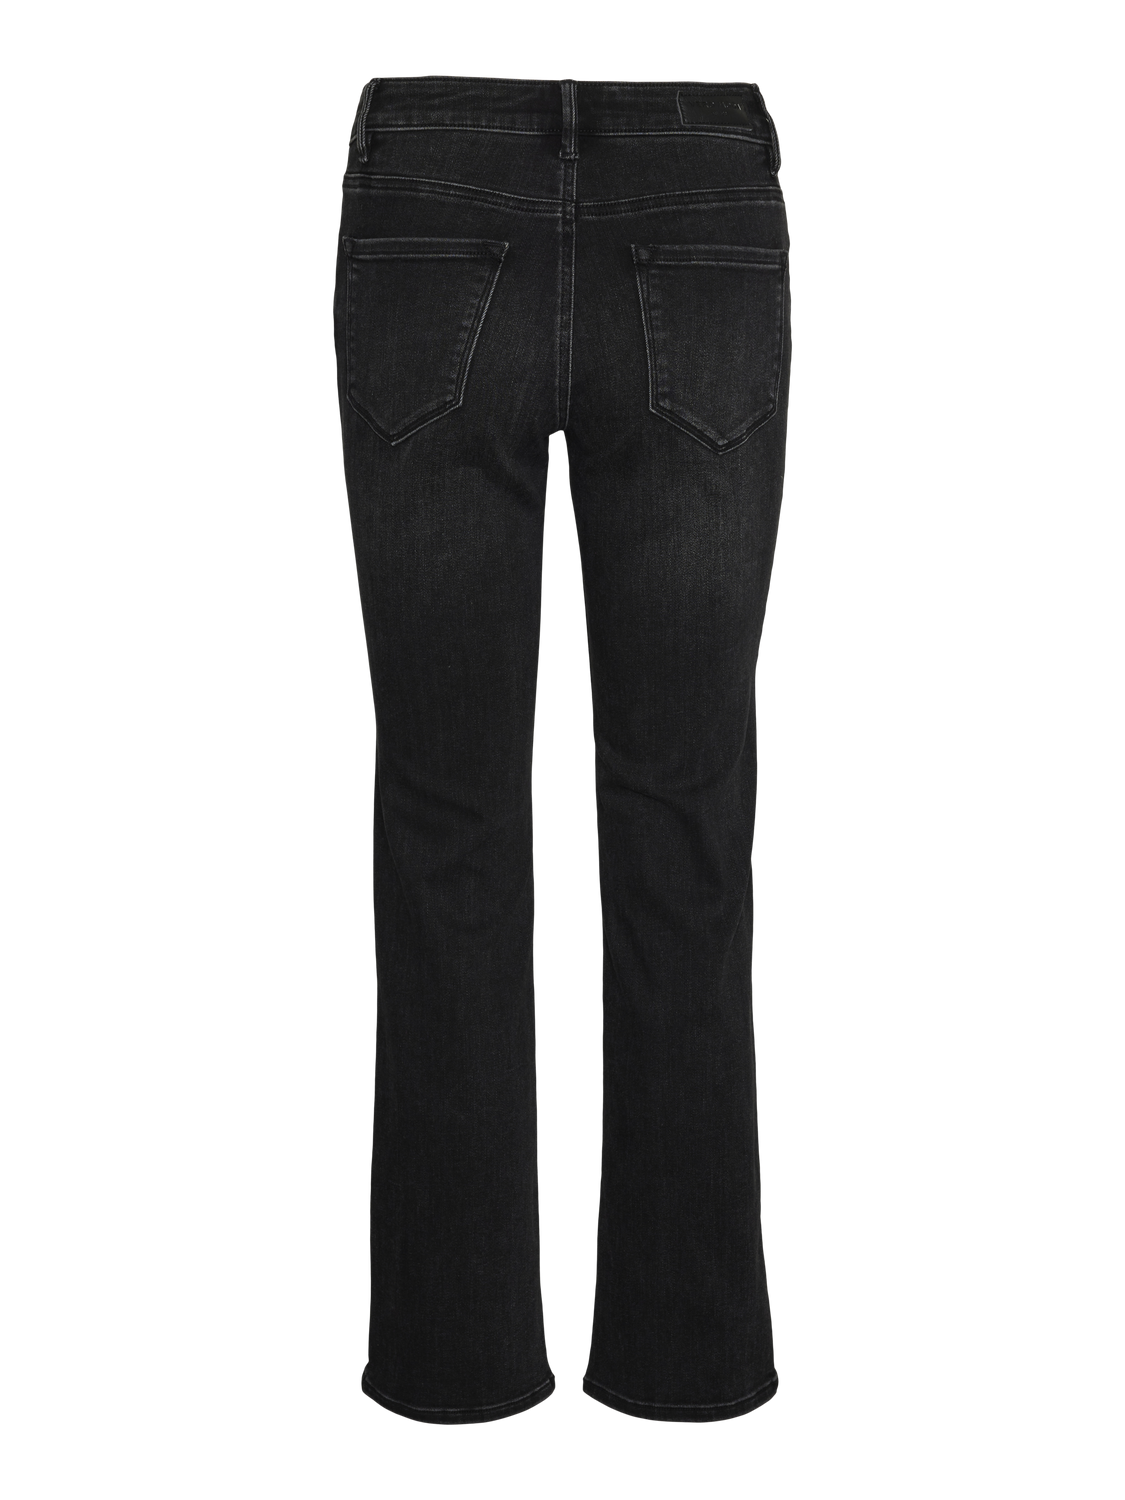 VMFLASH Jeans - Black Denim